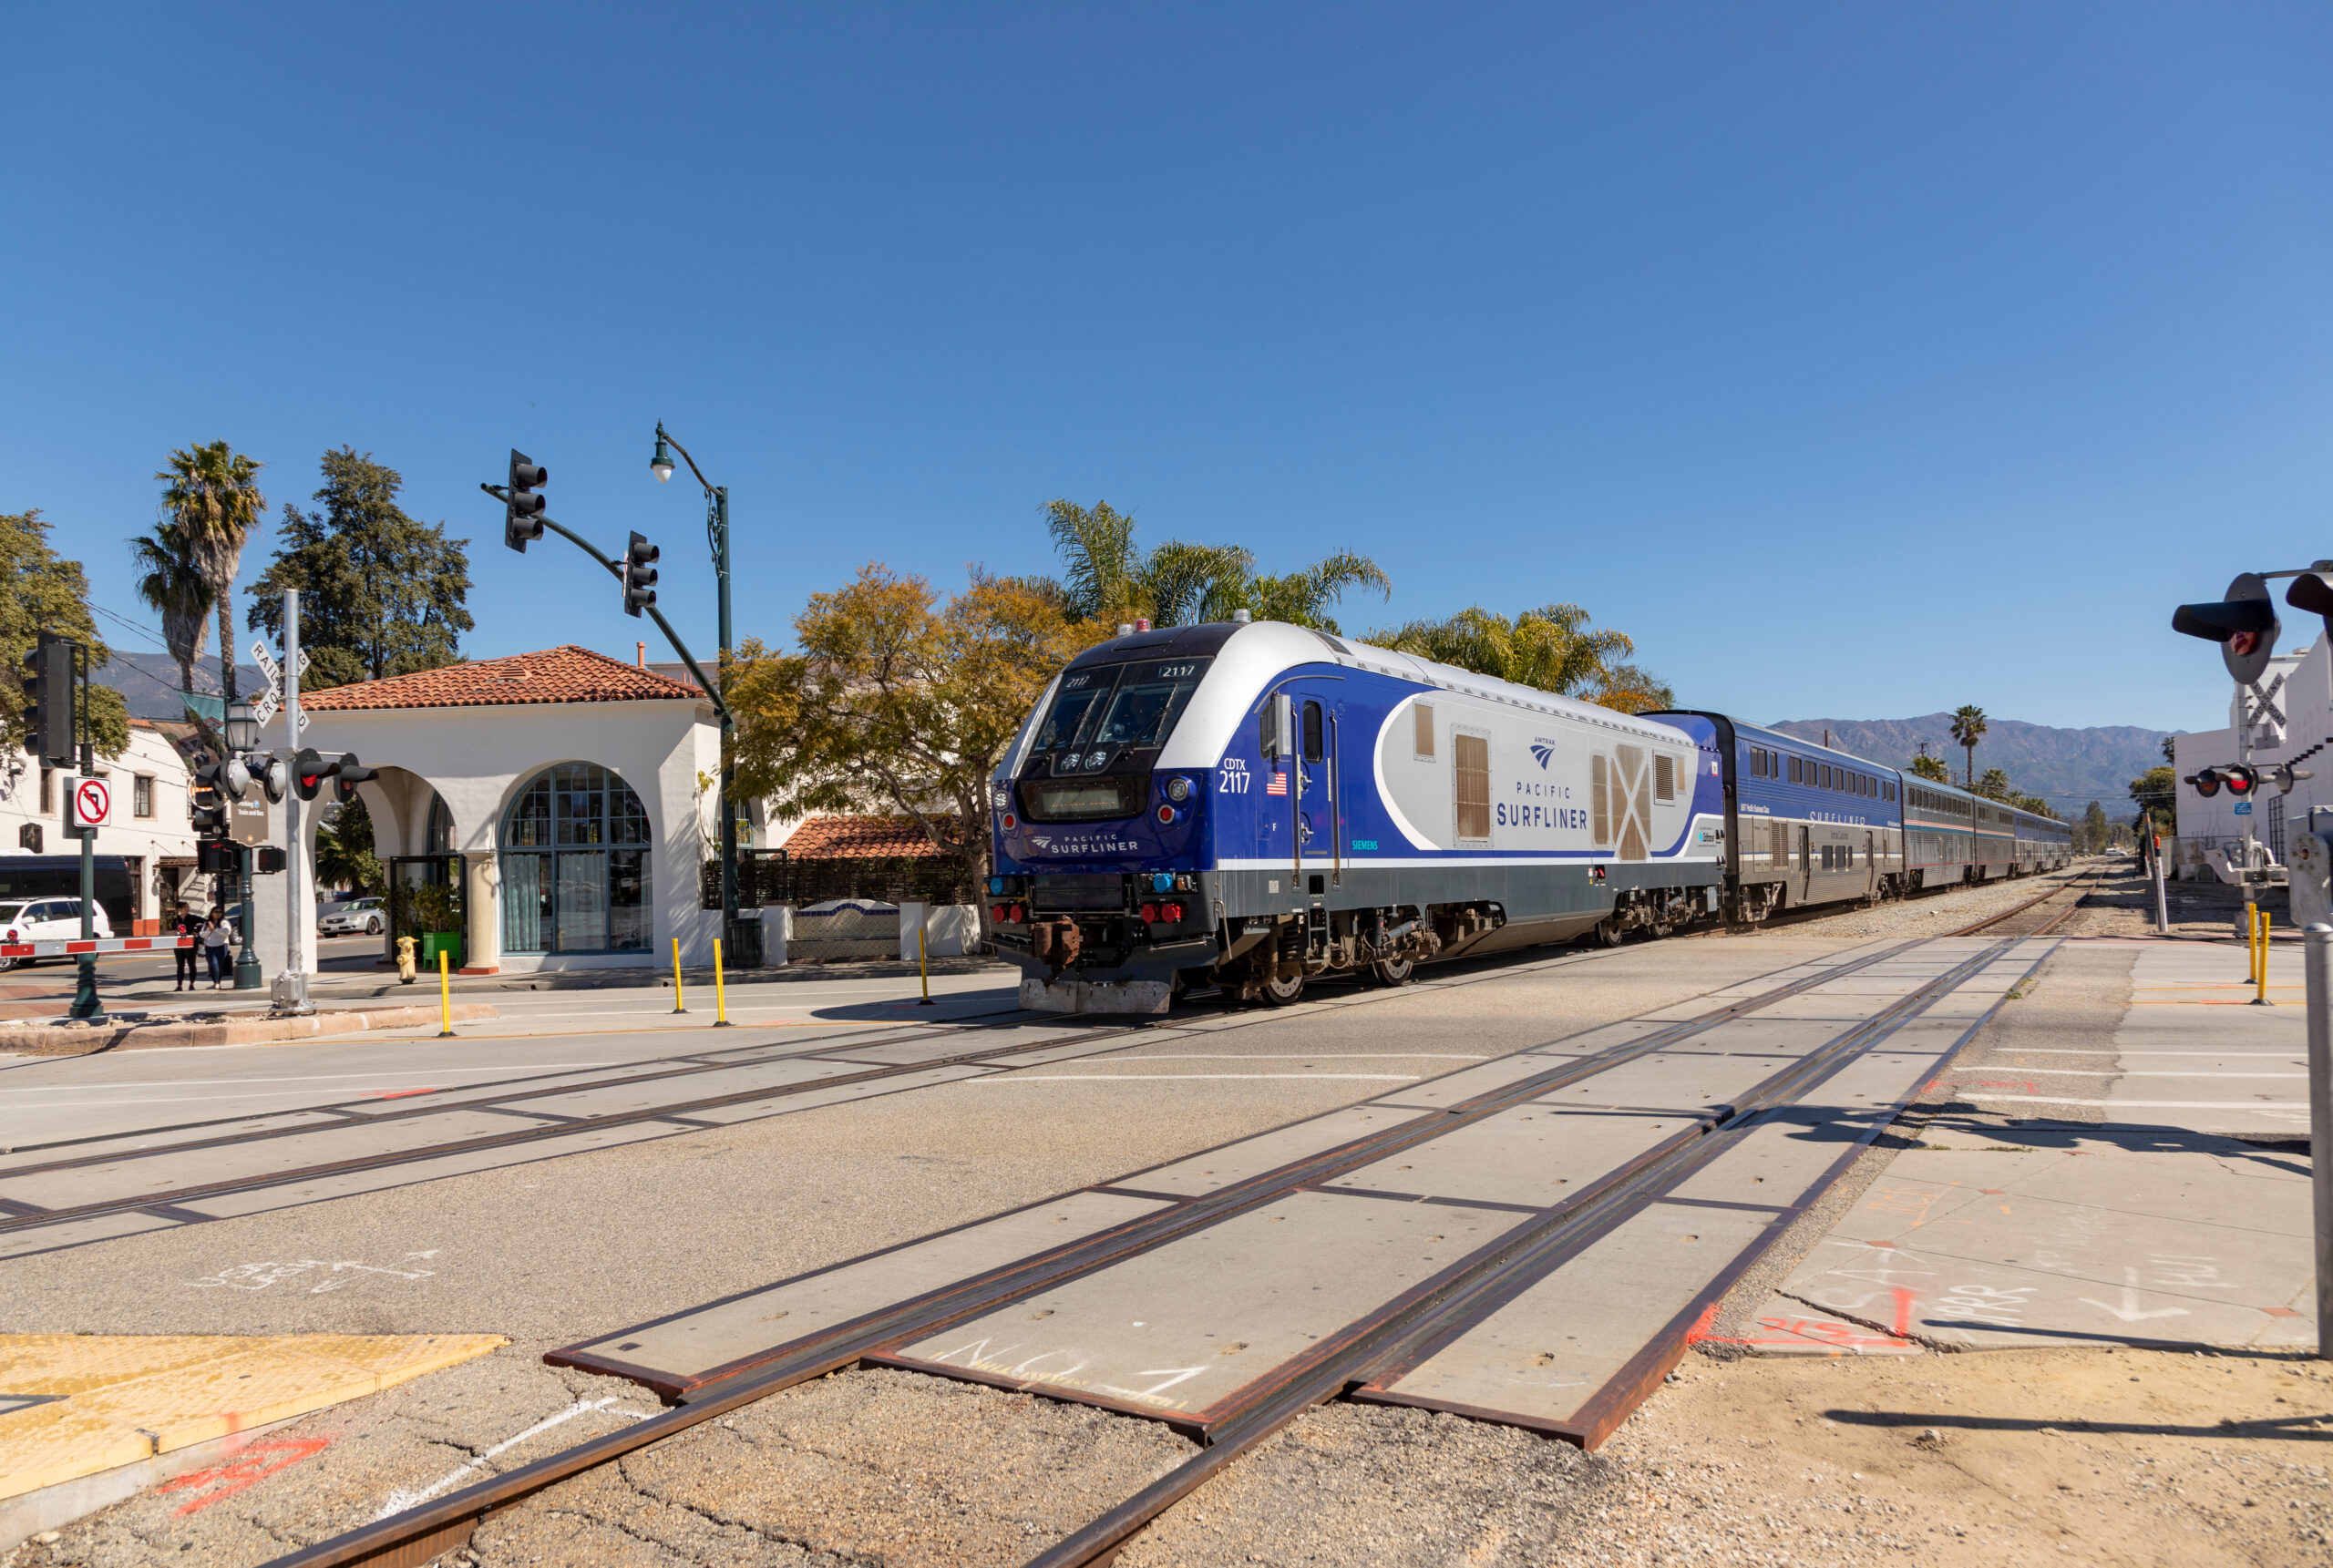 The Pacific Surfliner train enters the station at Santa Barbara.